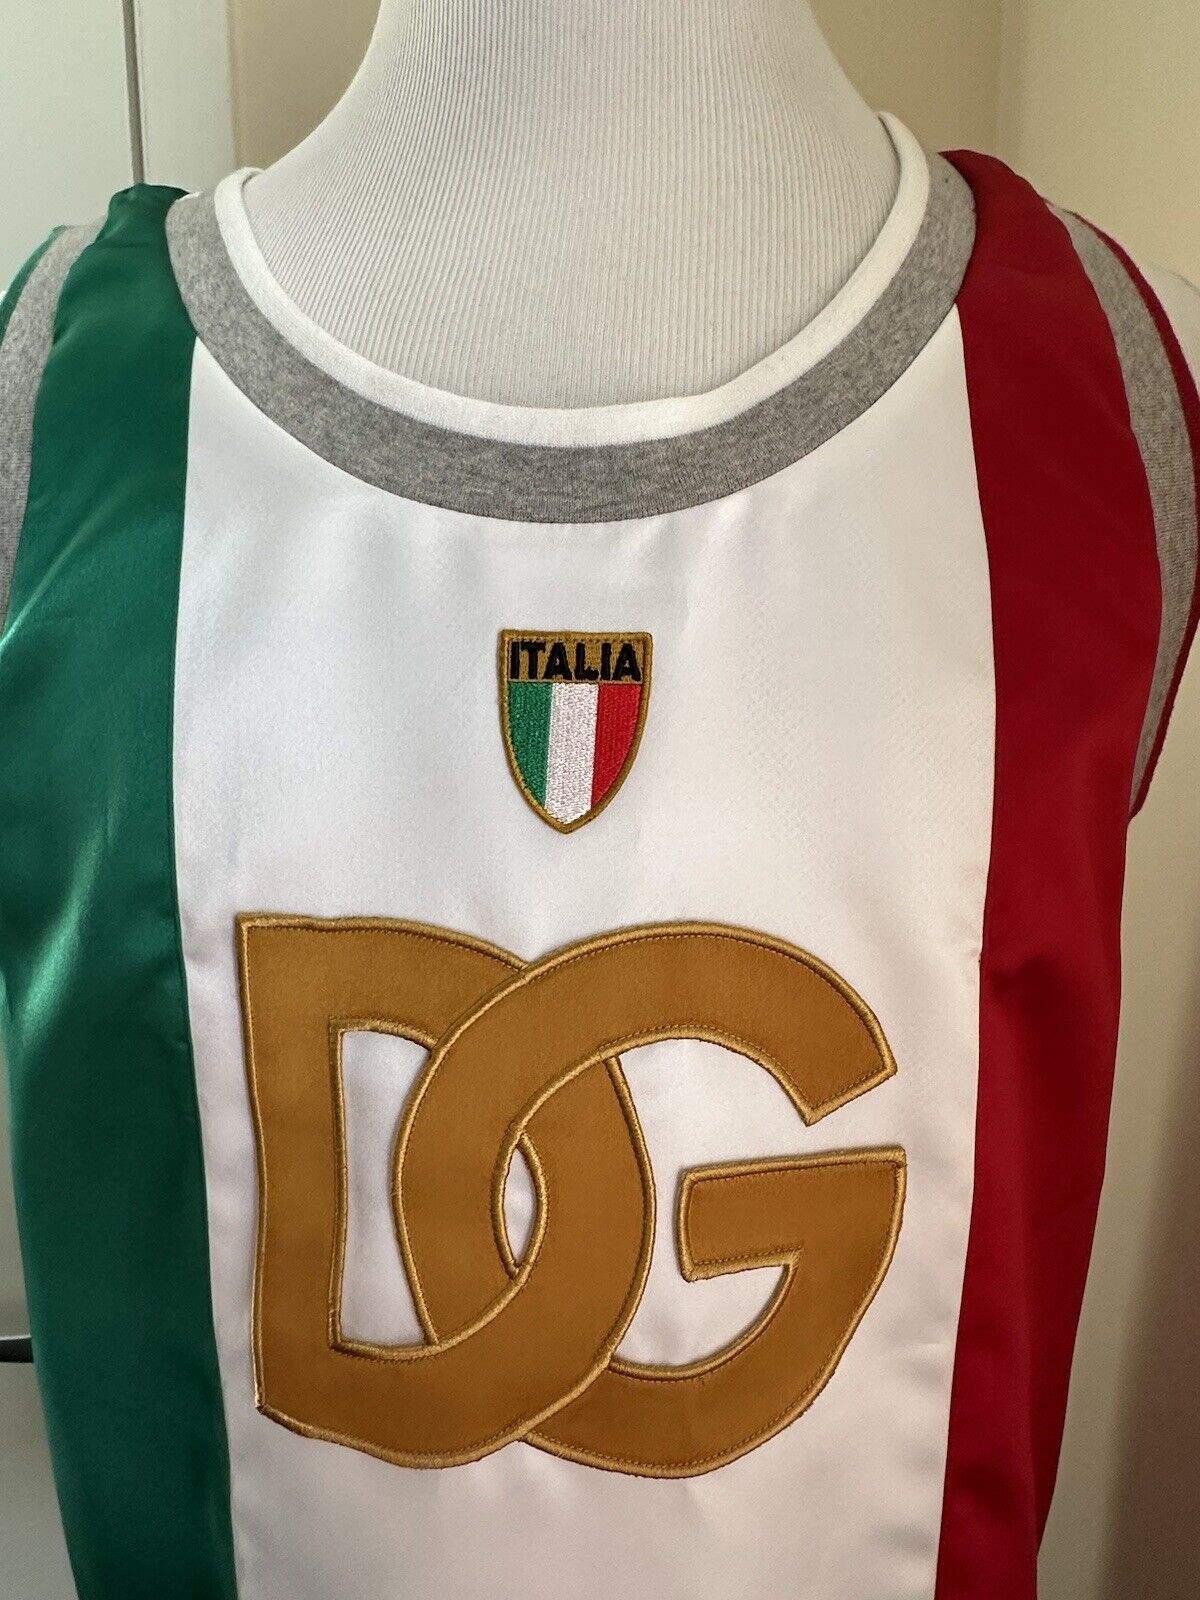 New $1295 Dolce&Gabbana Men’s Monogram Satin Jersey Tank Top Green/White/Red M